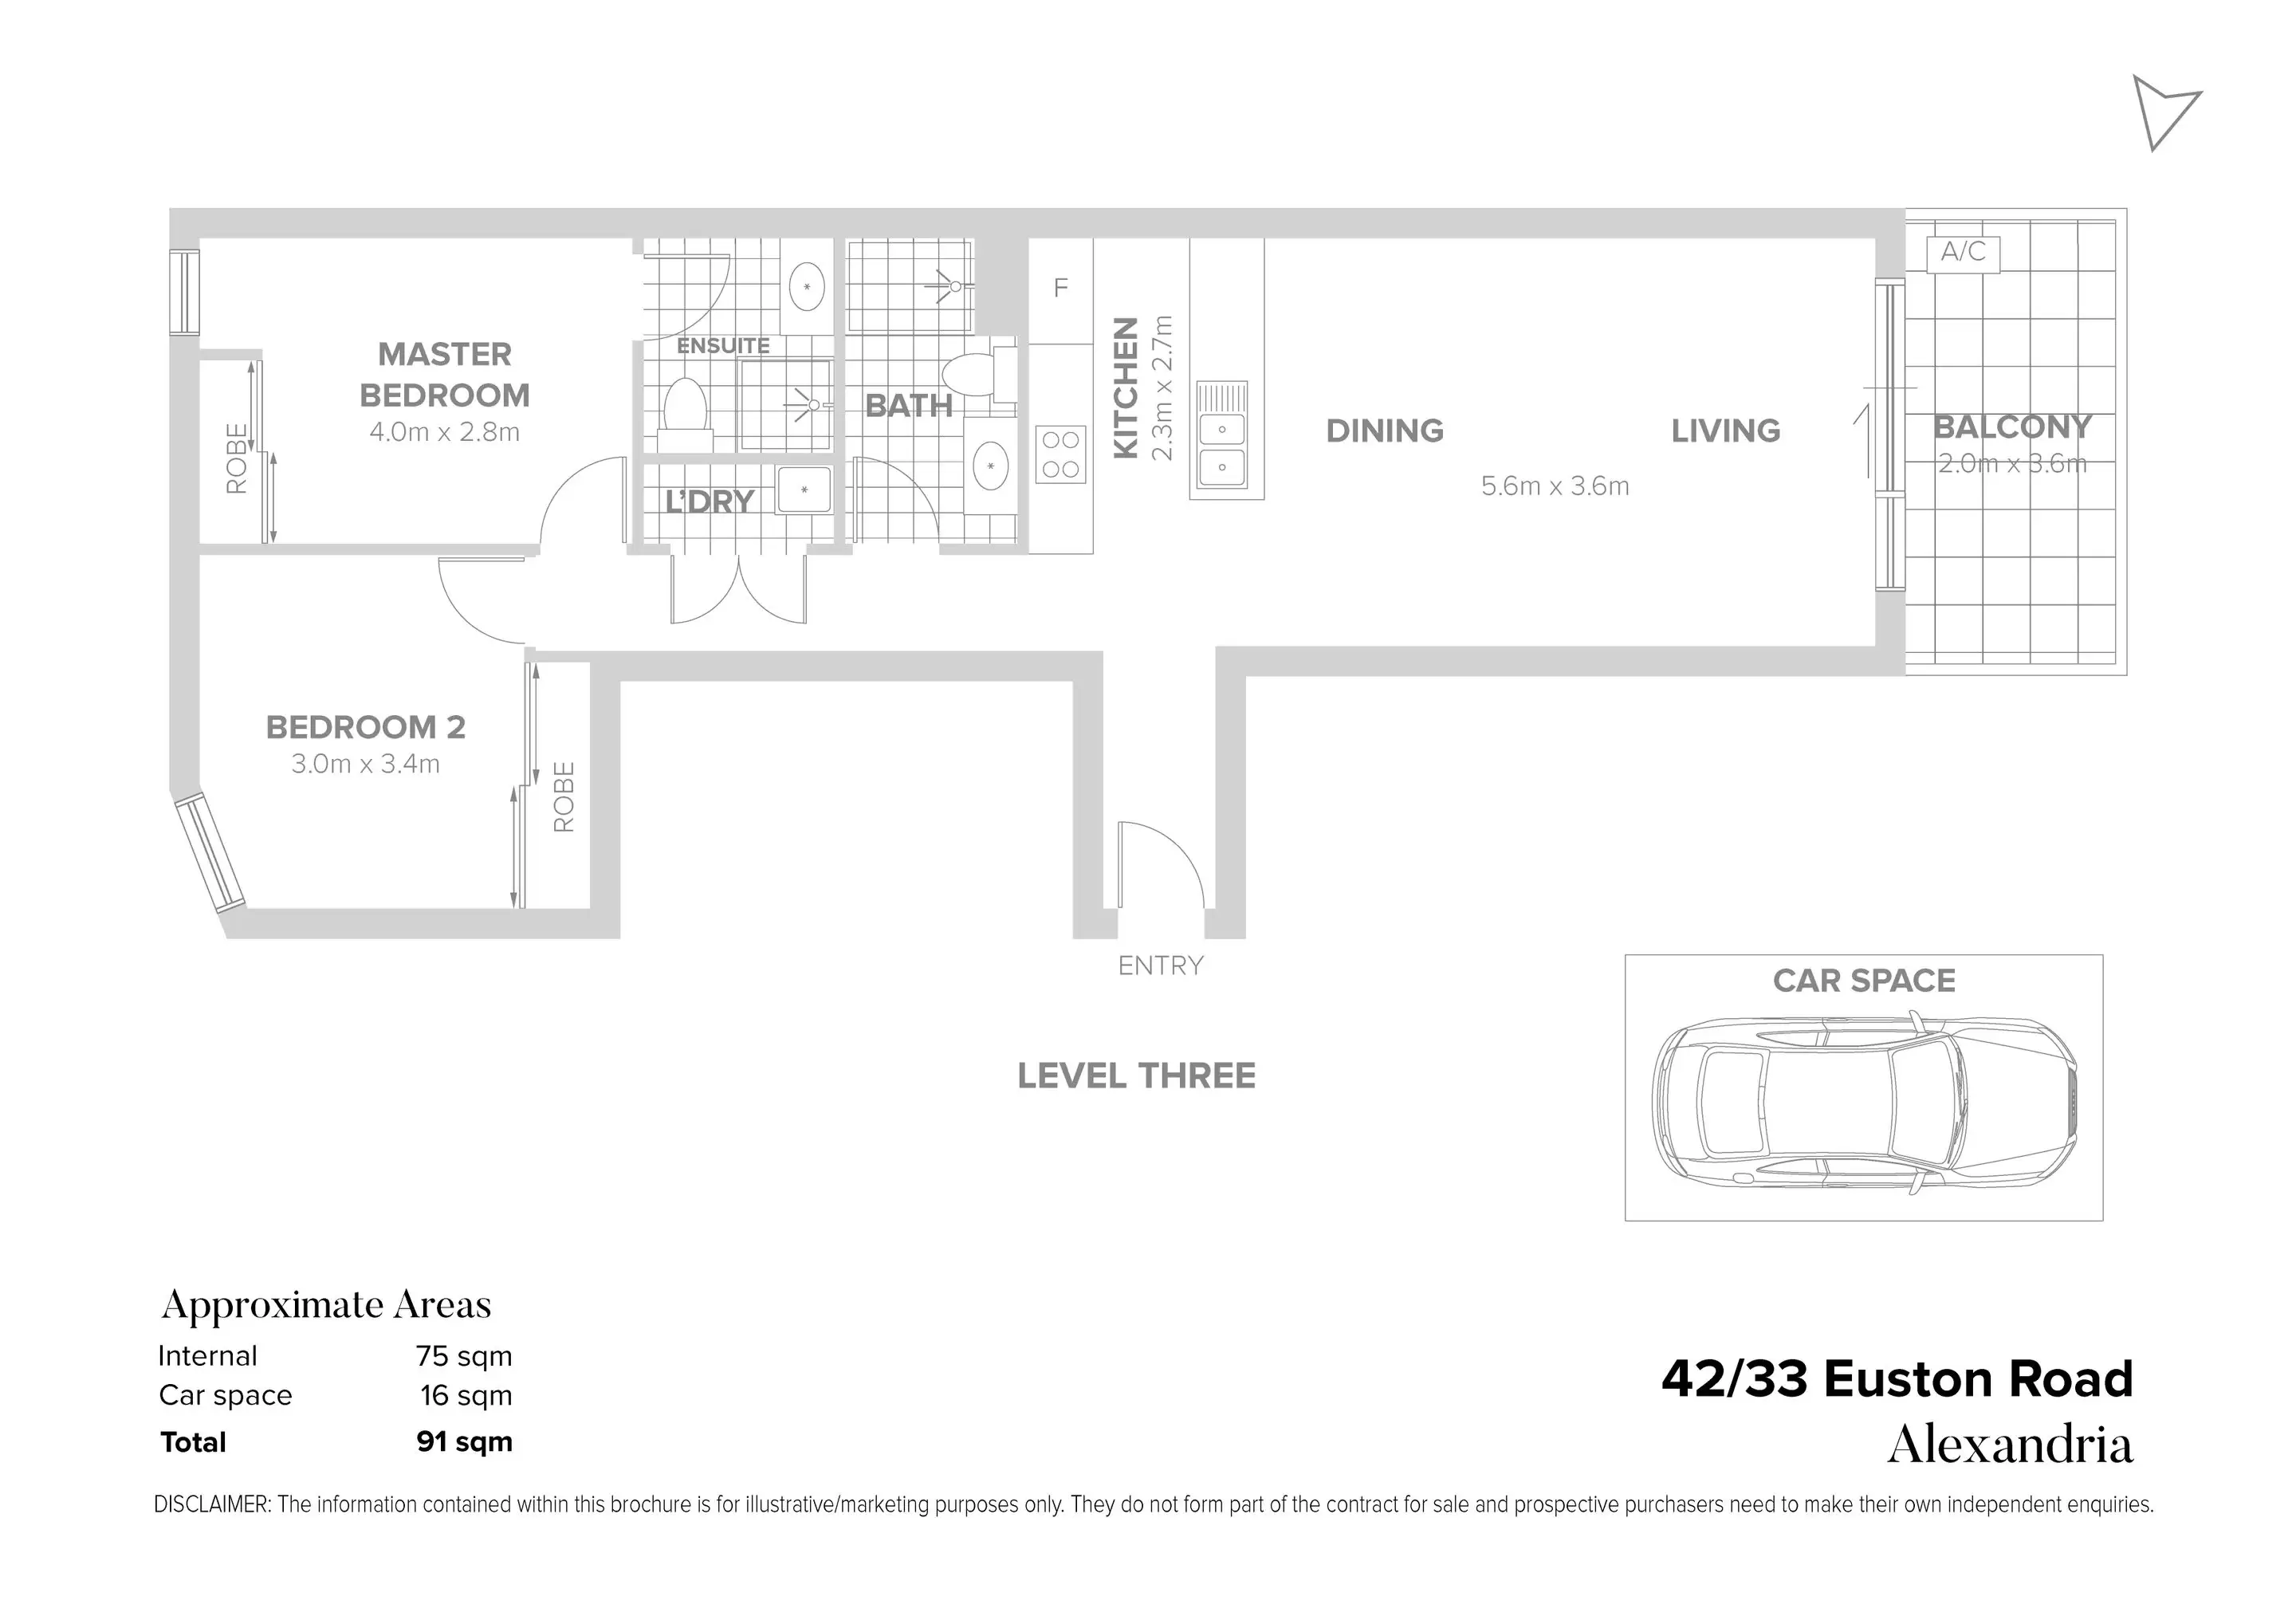 42/33 Euston Road, Alexandria Sold by Chidiac Realty - floorplan